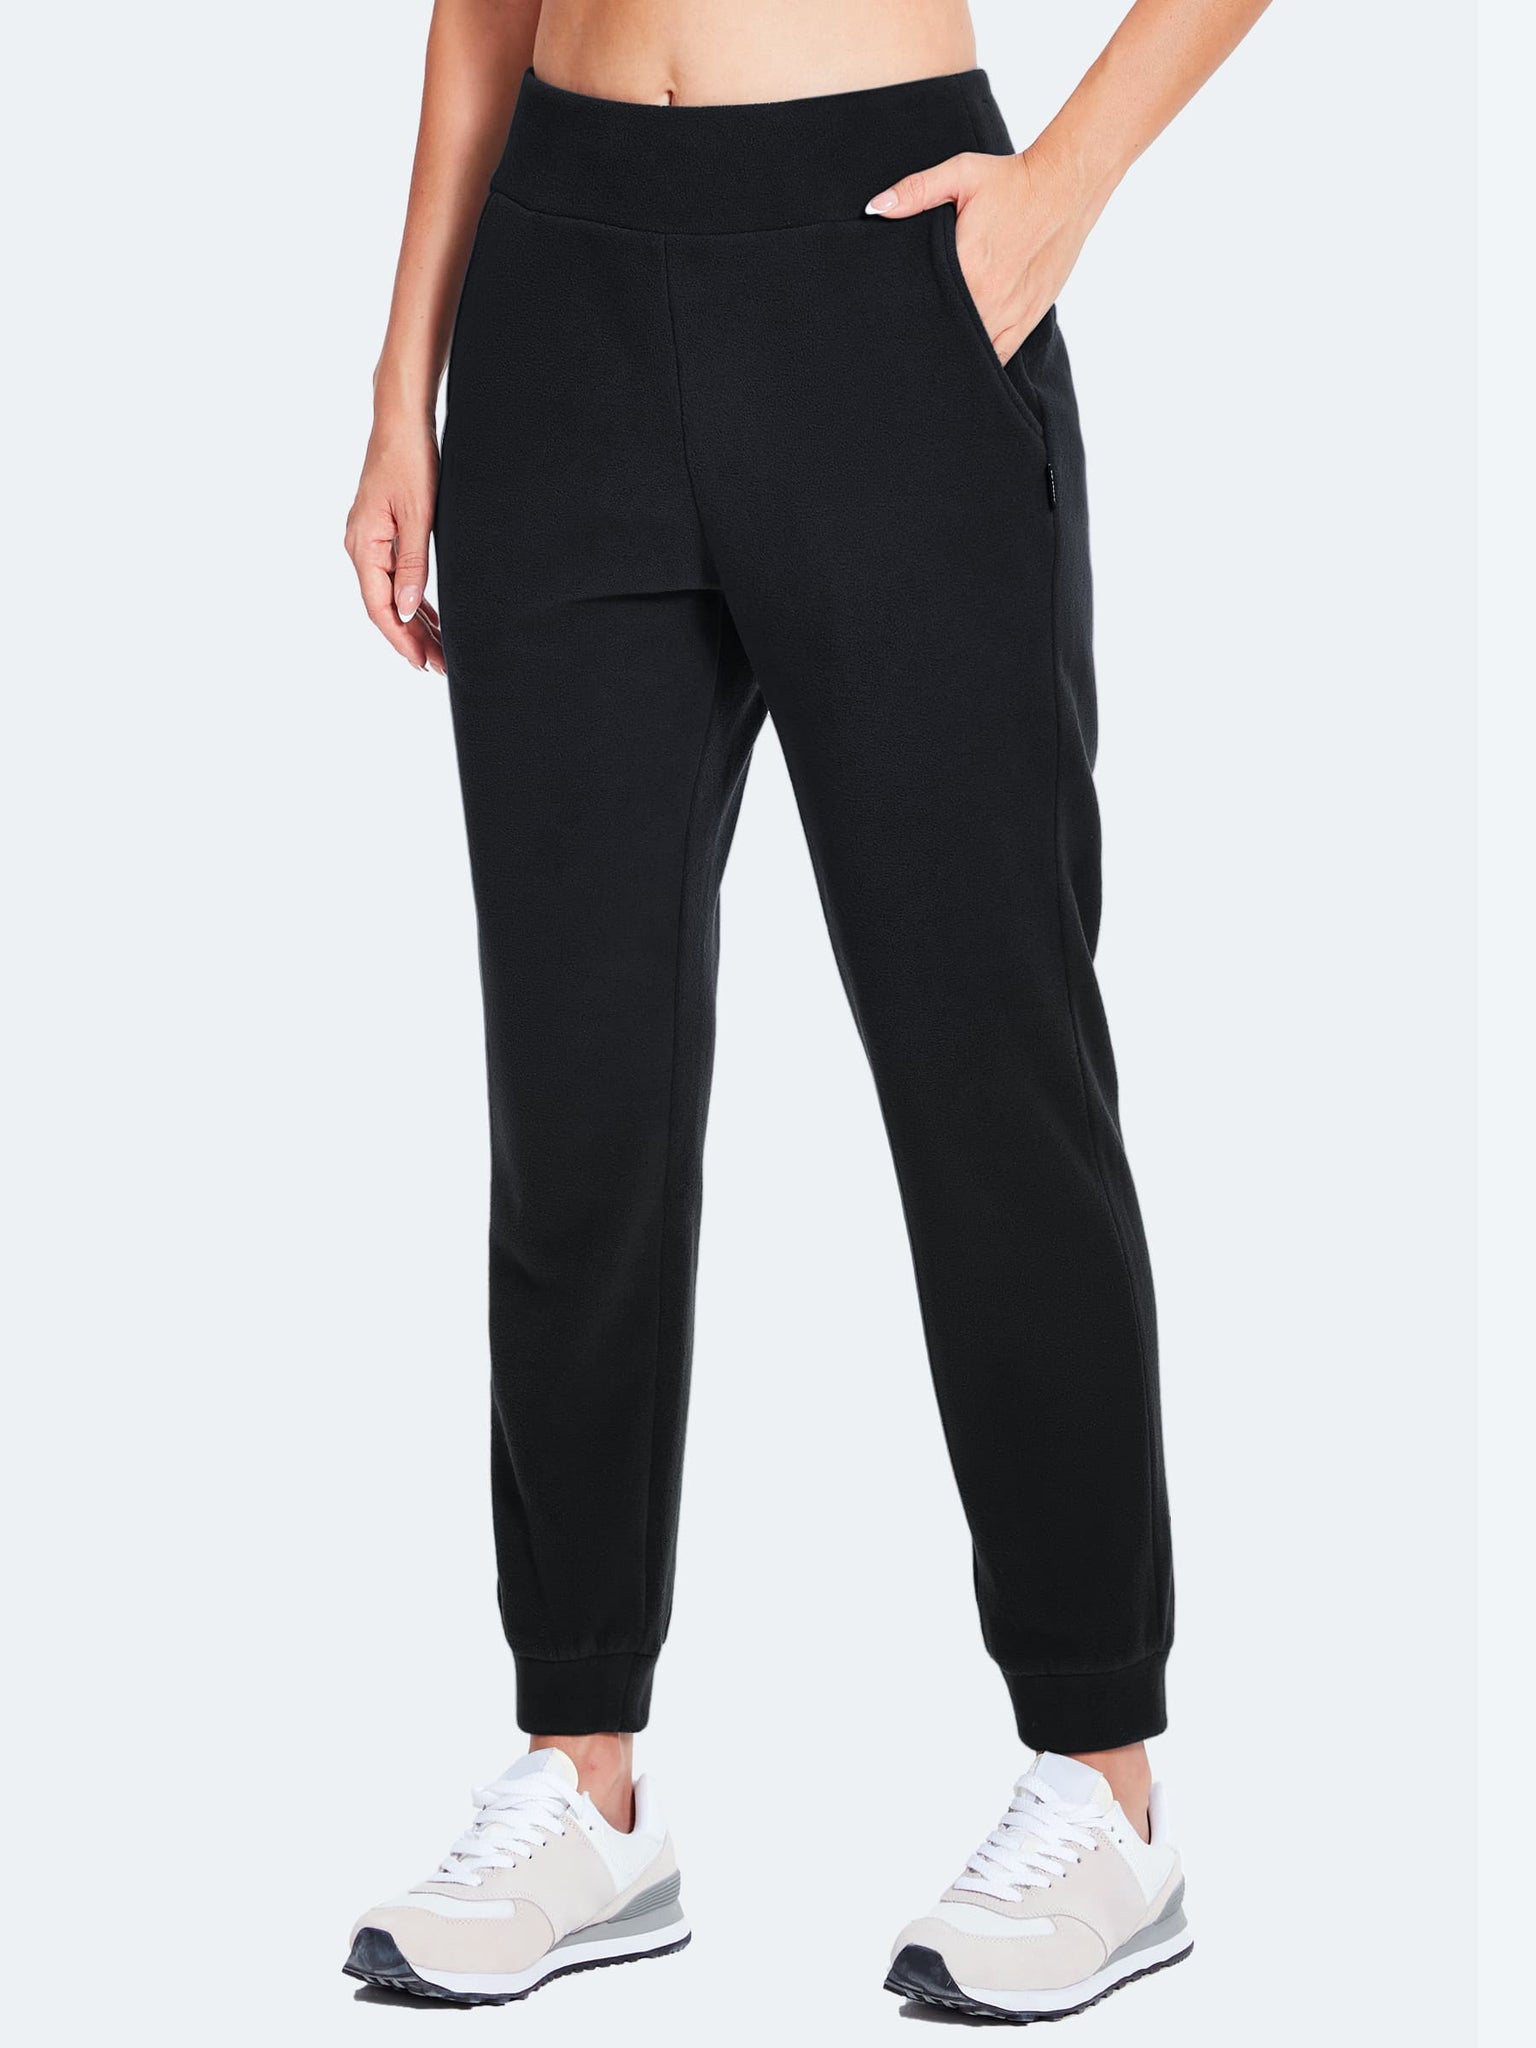  Cotton Fleece Lined Sweatpants Women Straight Leg Casual  Lounge Sweat Pants For Women Jujube Brown XX-Small